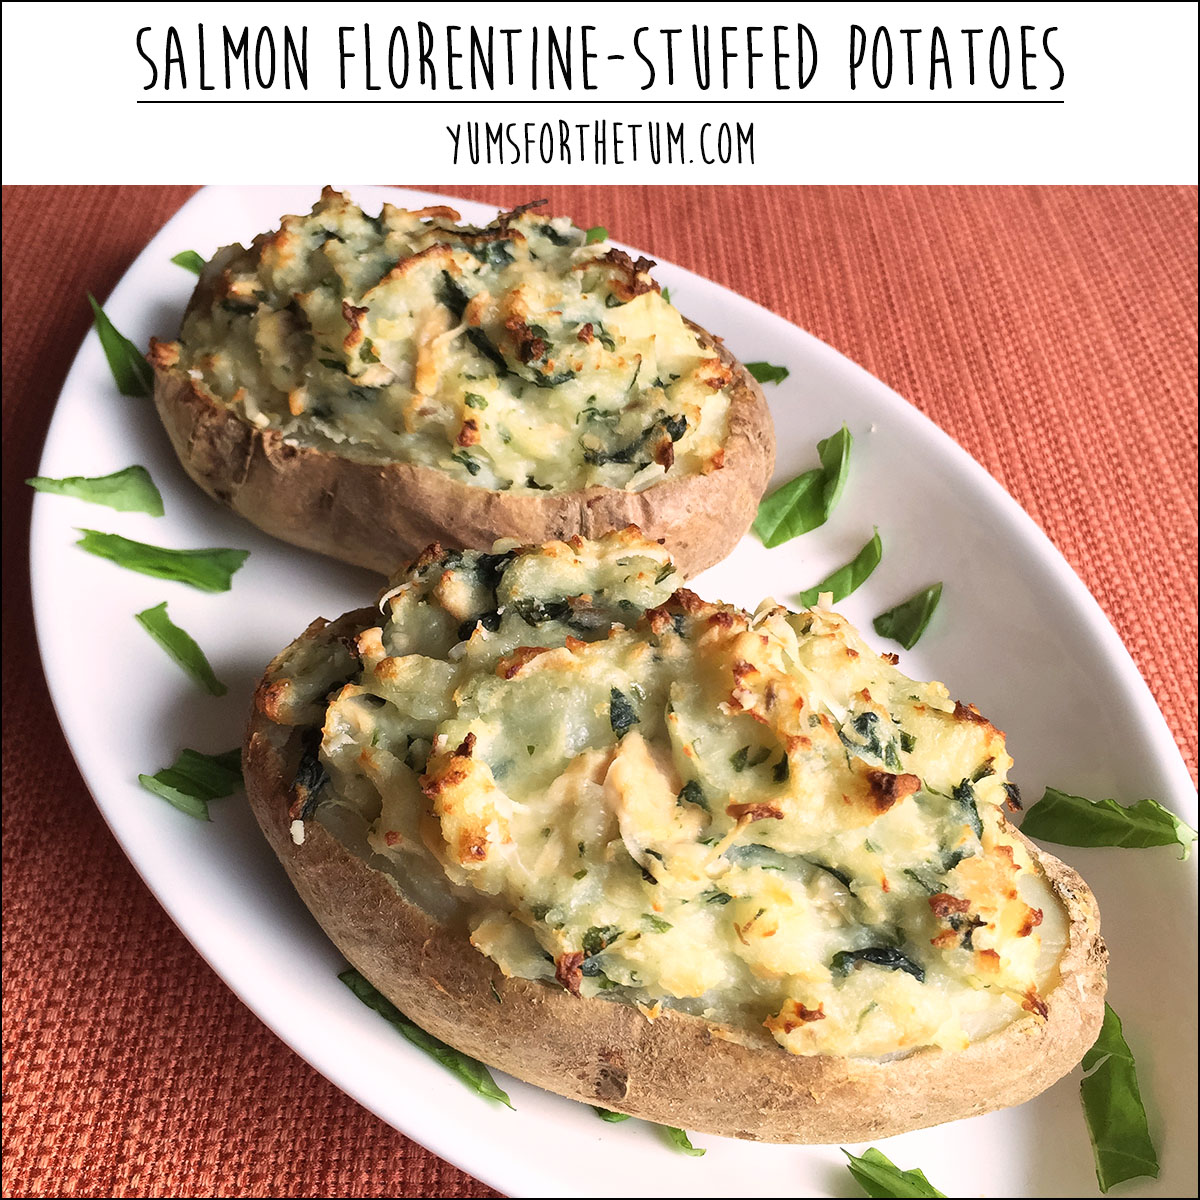 Salmon Florentine-Stuffed Potatoes